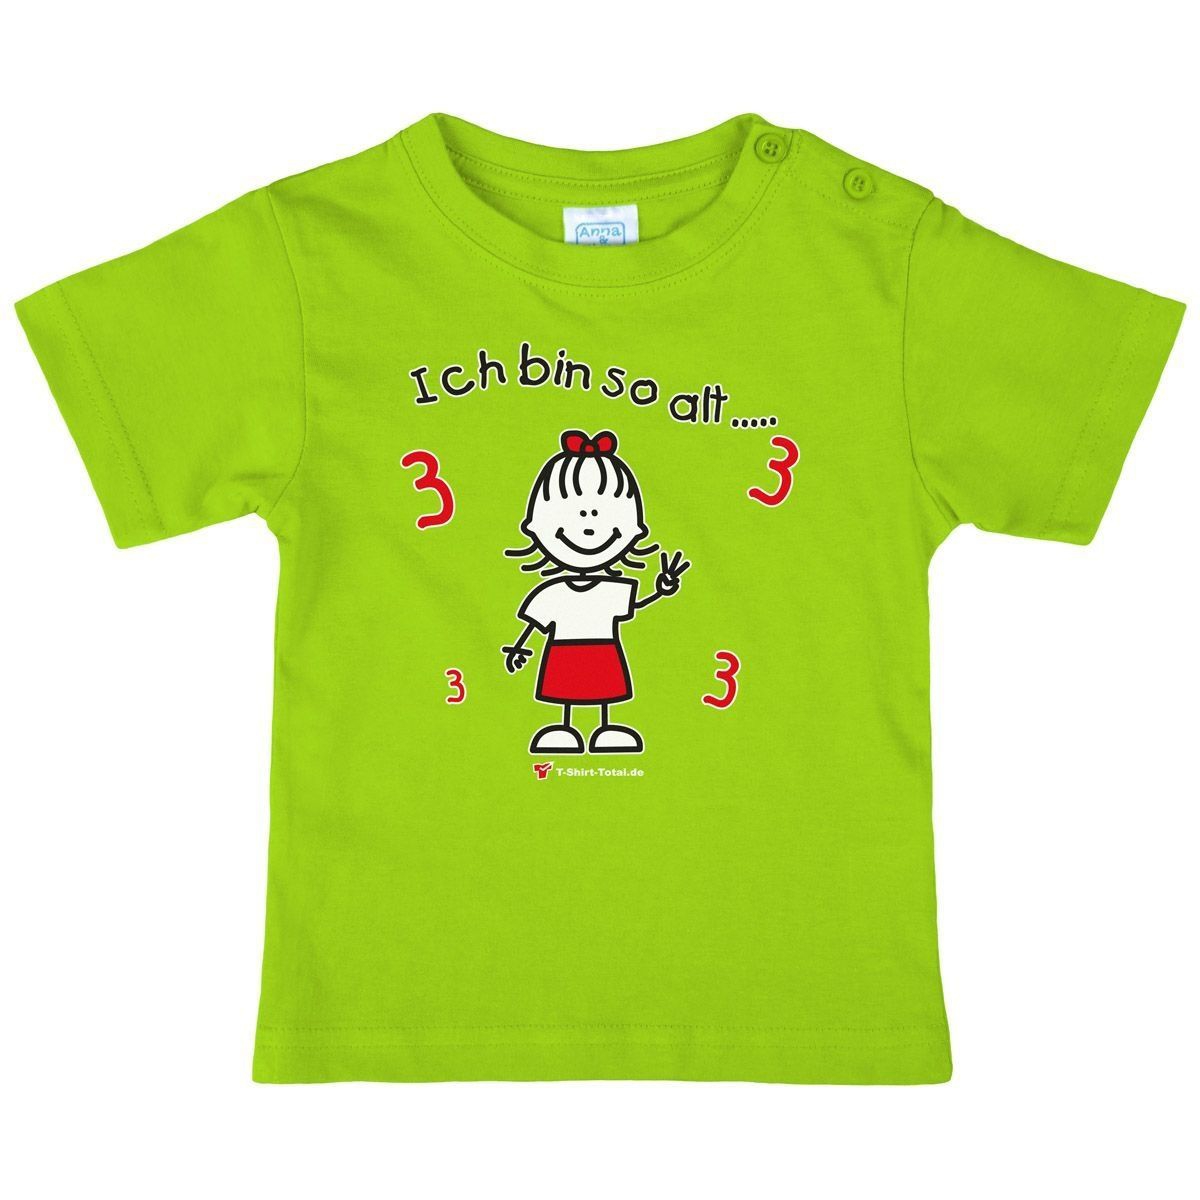 Mädchen so alt 3 Kinder T-Shirt hellgrün 92